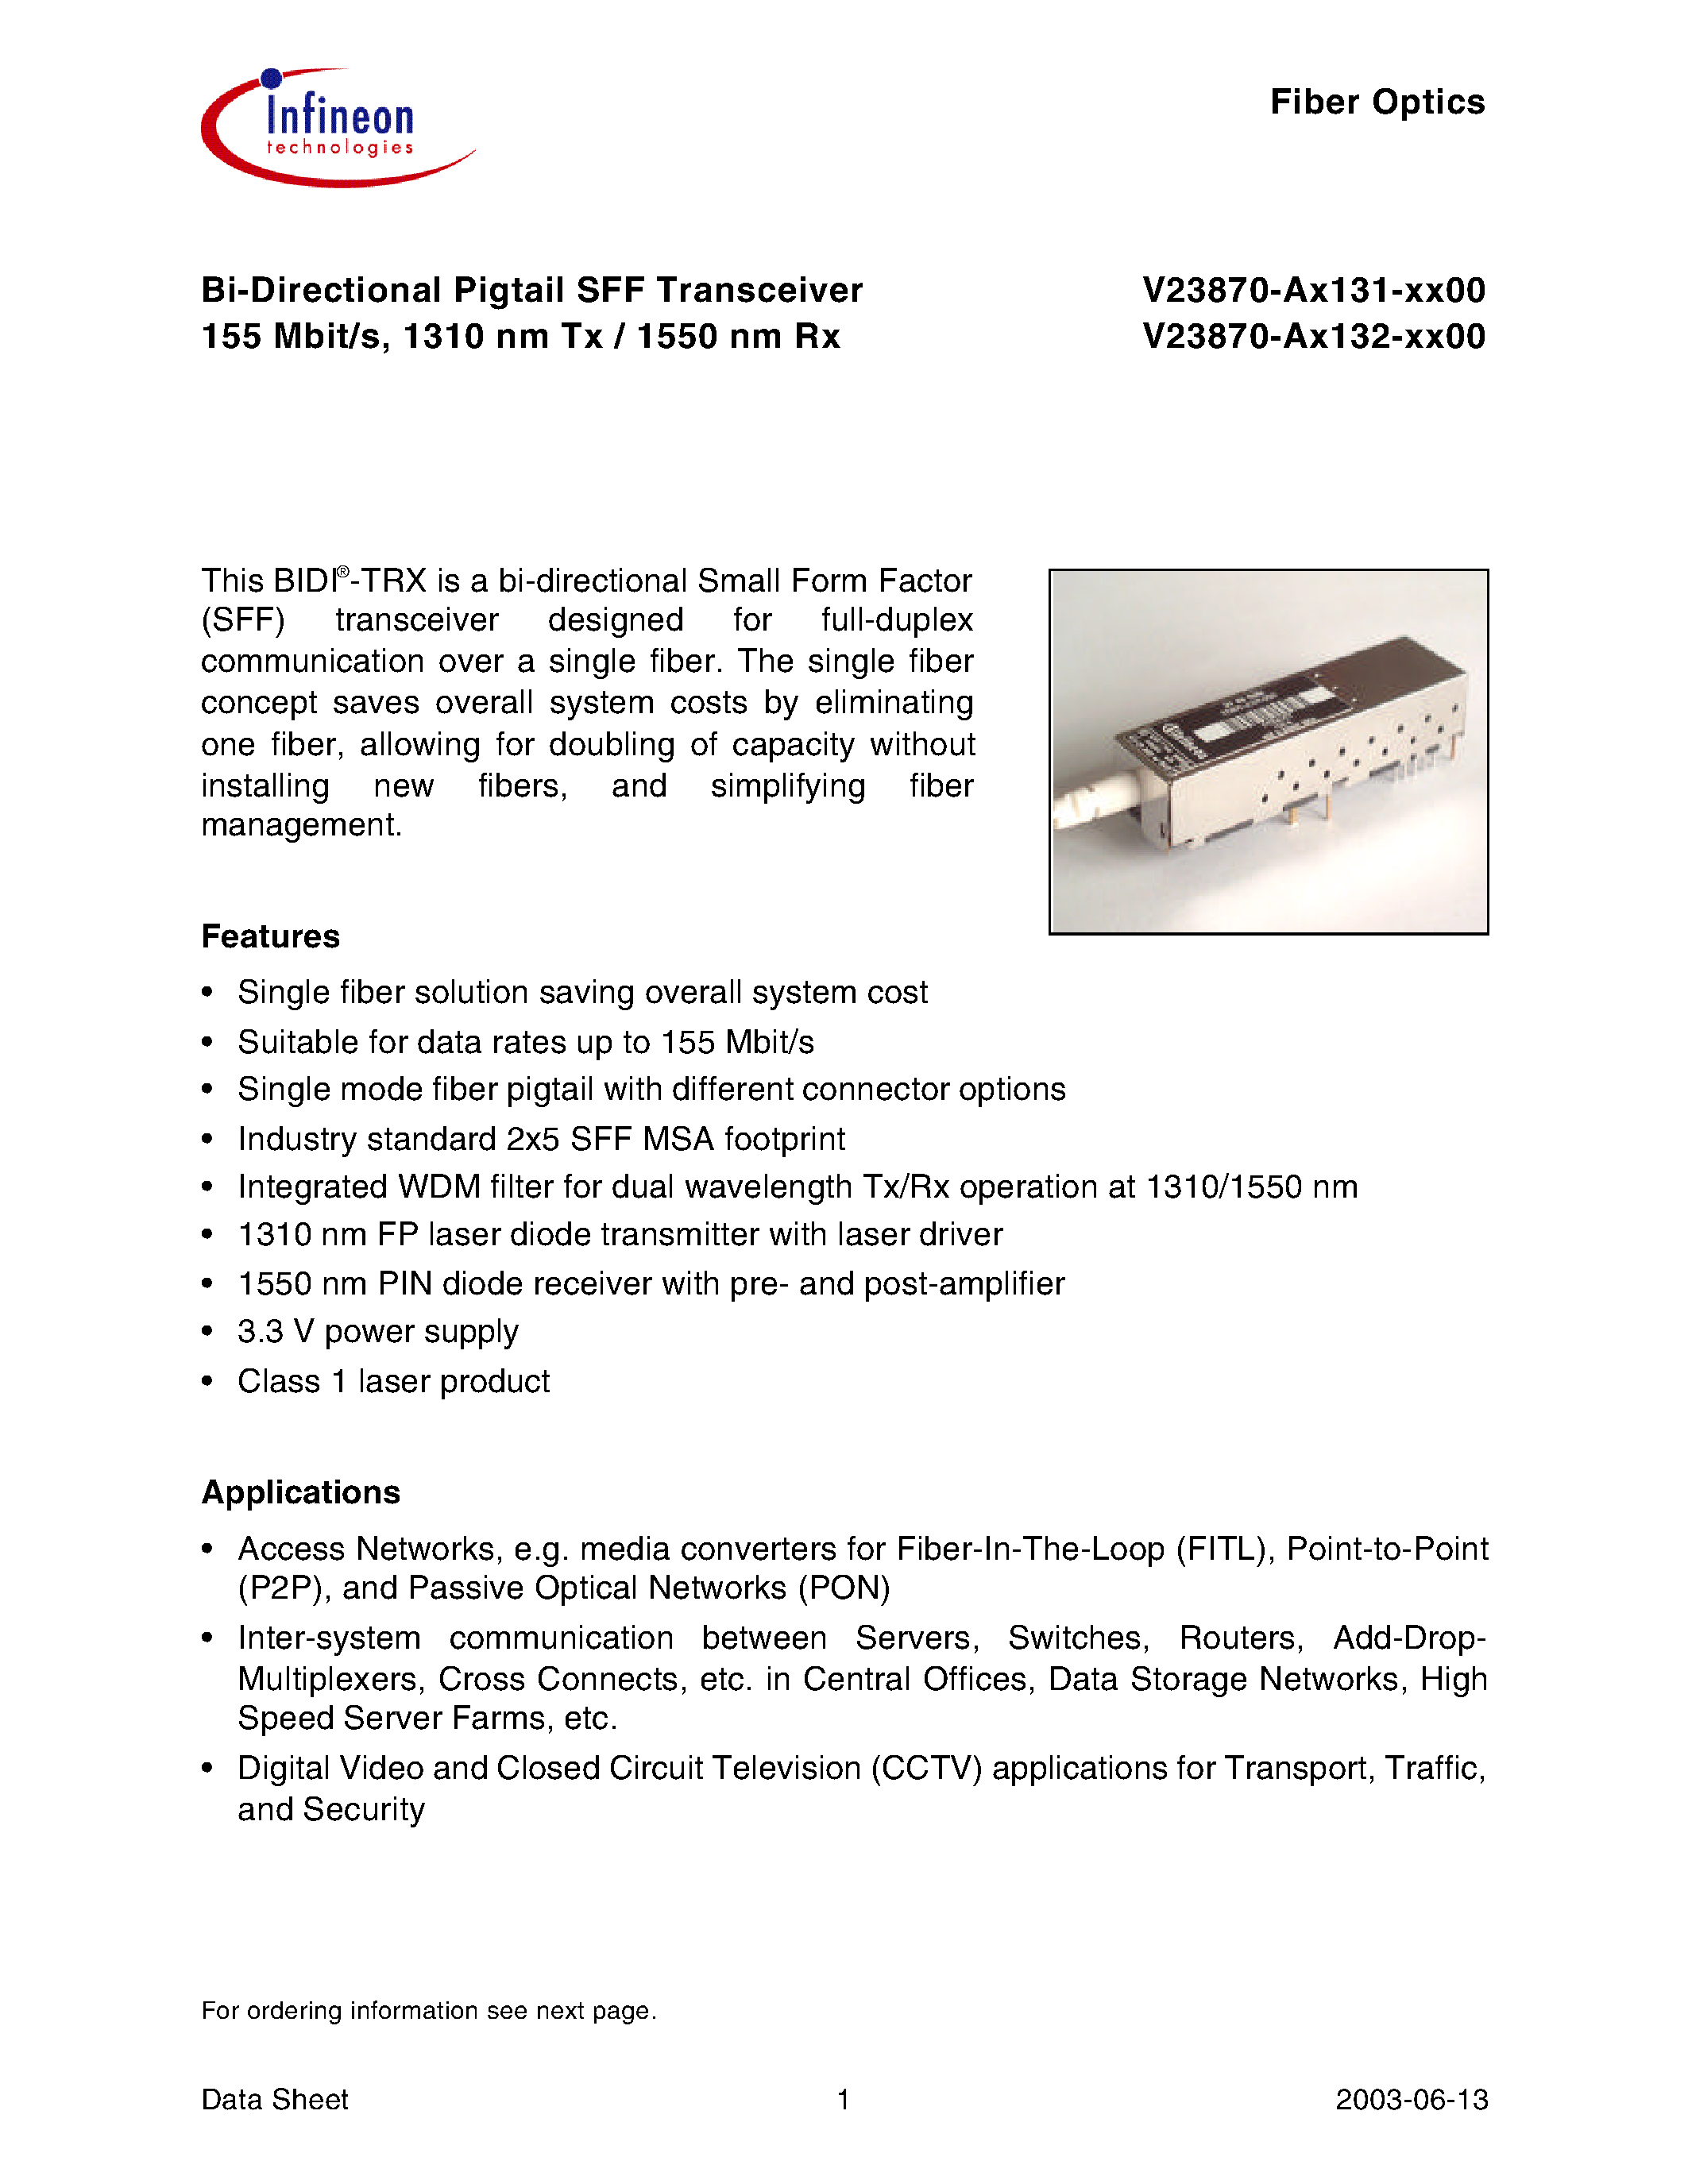 Даташит V23870-A3131-B500 - Bi-Directional Pigtail SFF Transceiver 155 Mbit/s/ 1310 nm Tx / 1550 nm Rx страница 1